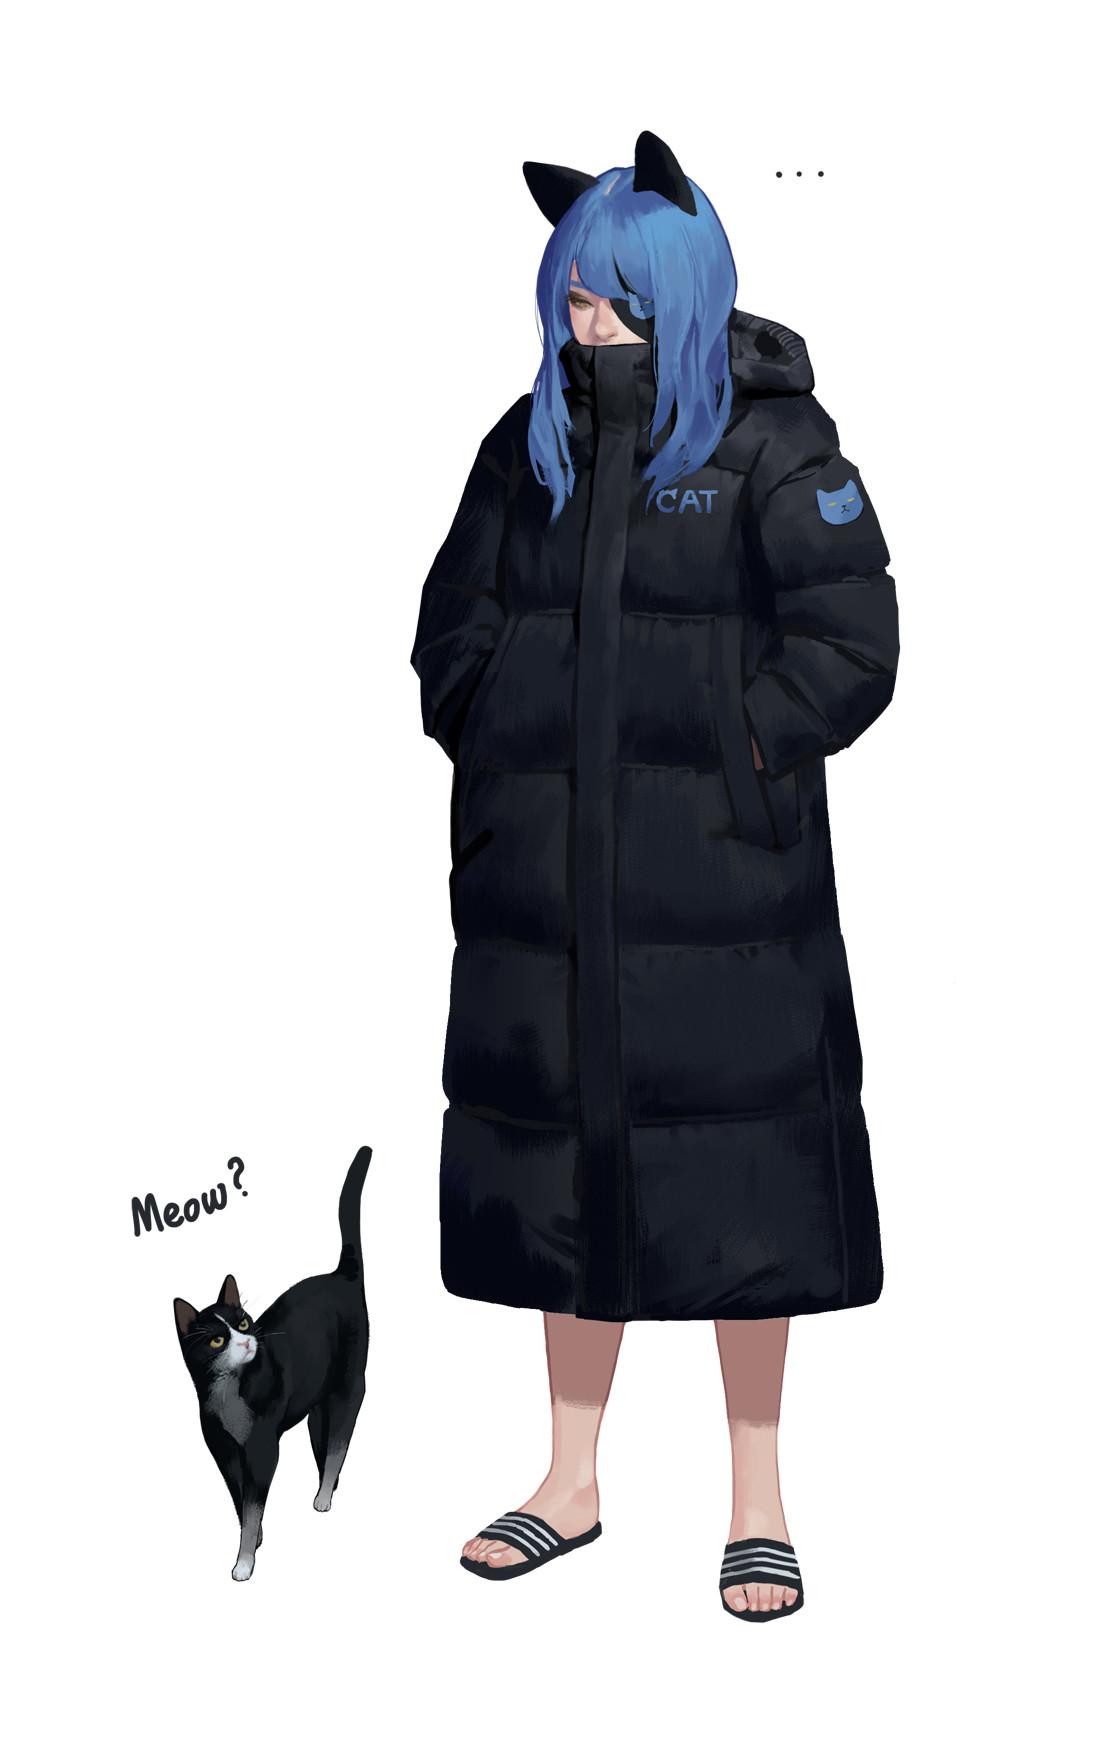 Anime 1100x1750 blue hair cats digital art coats simple background